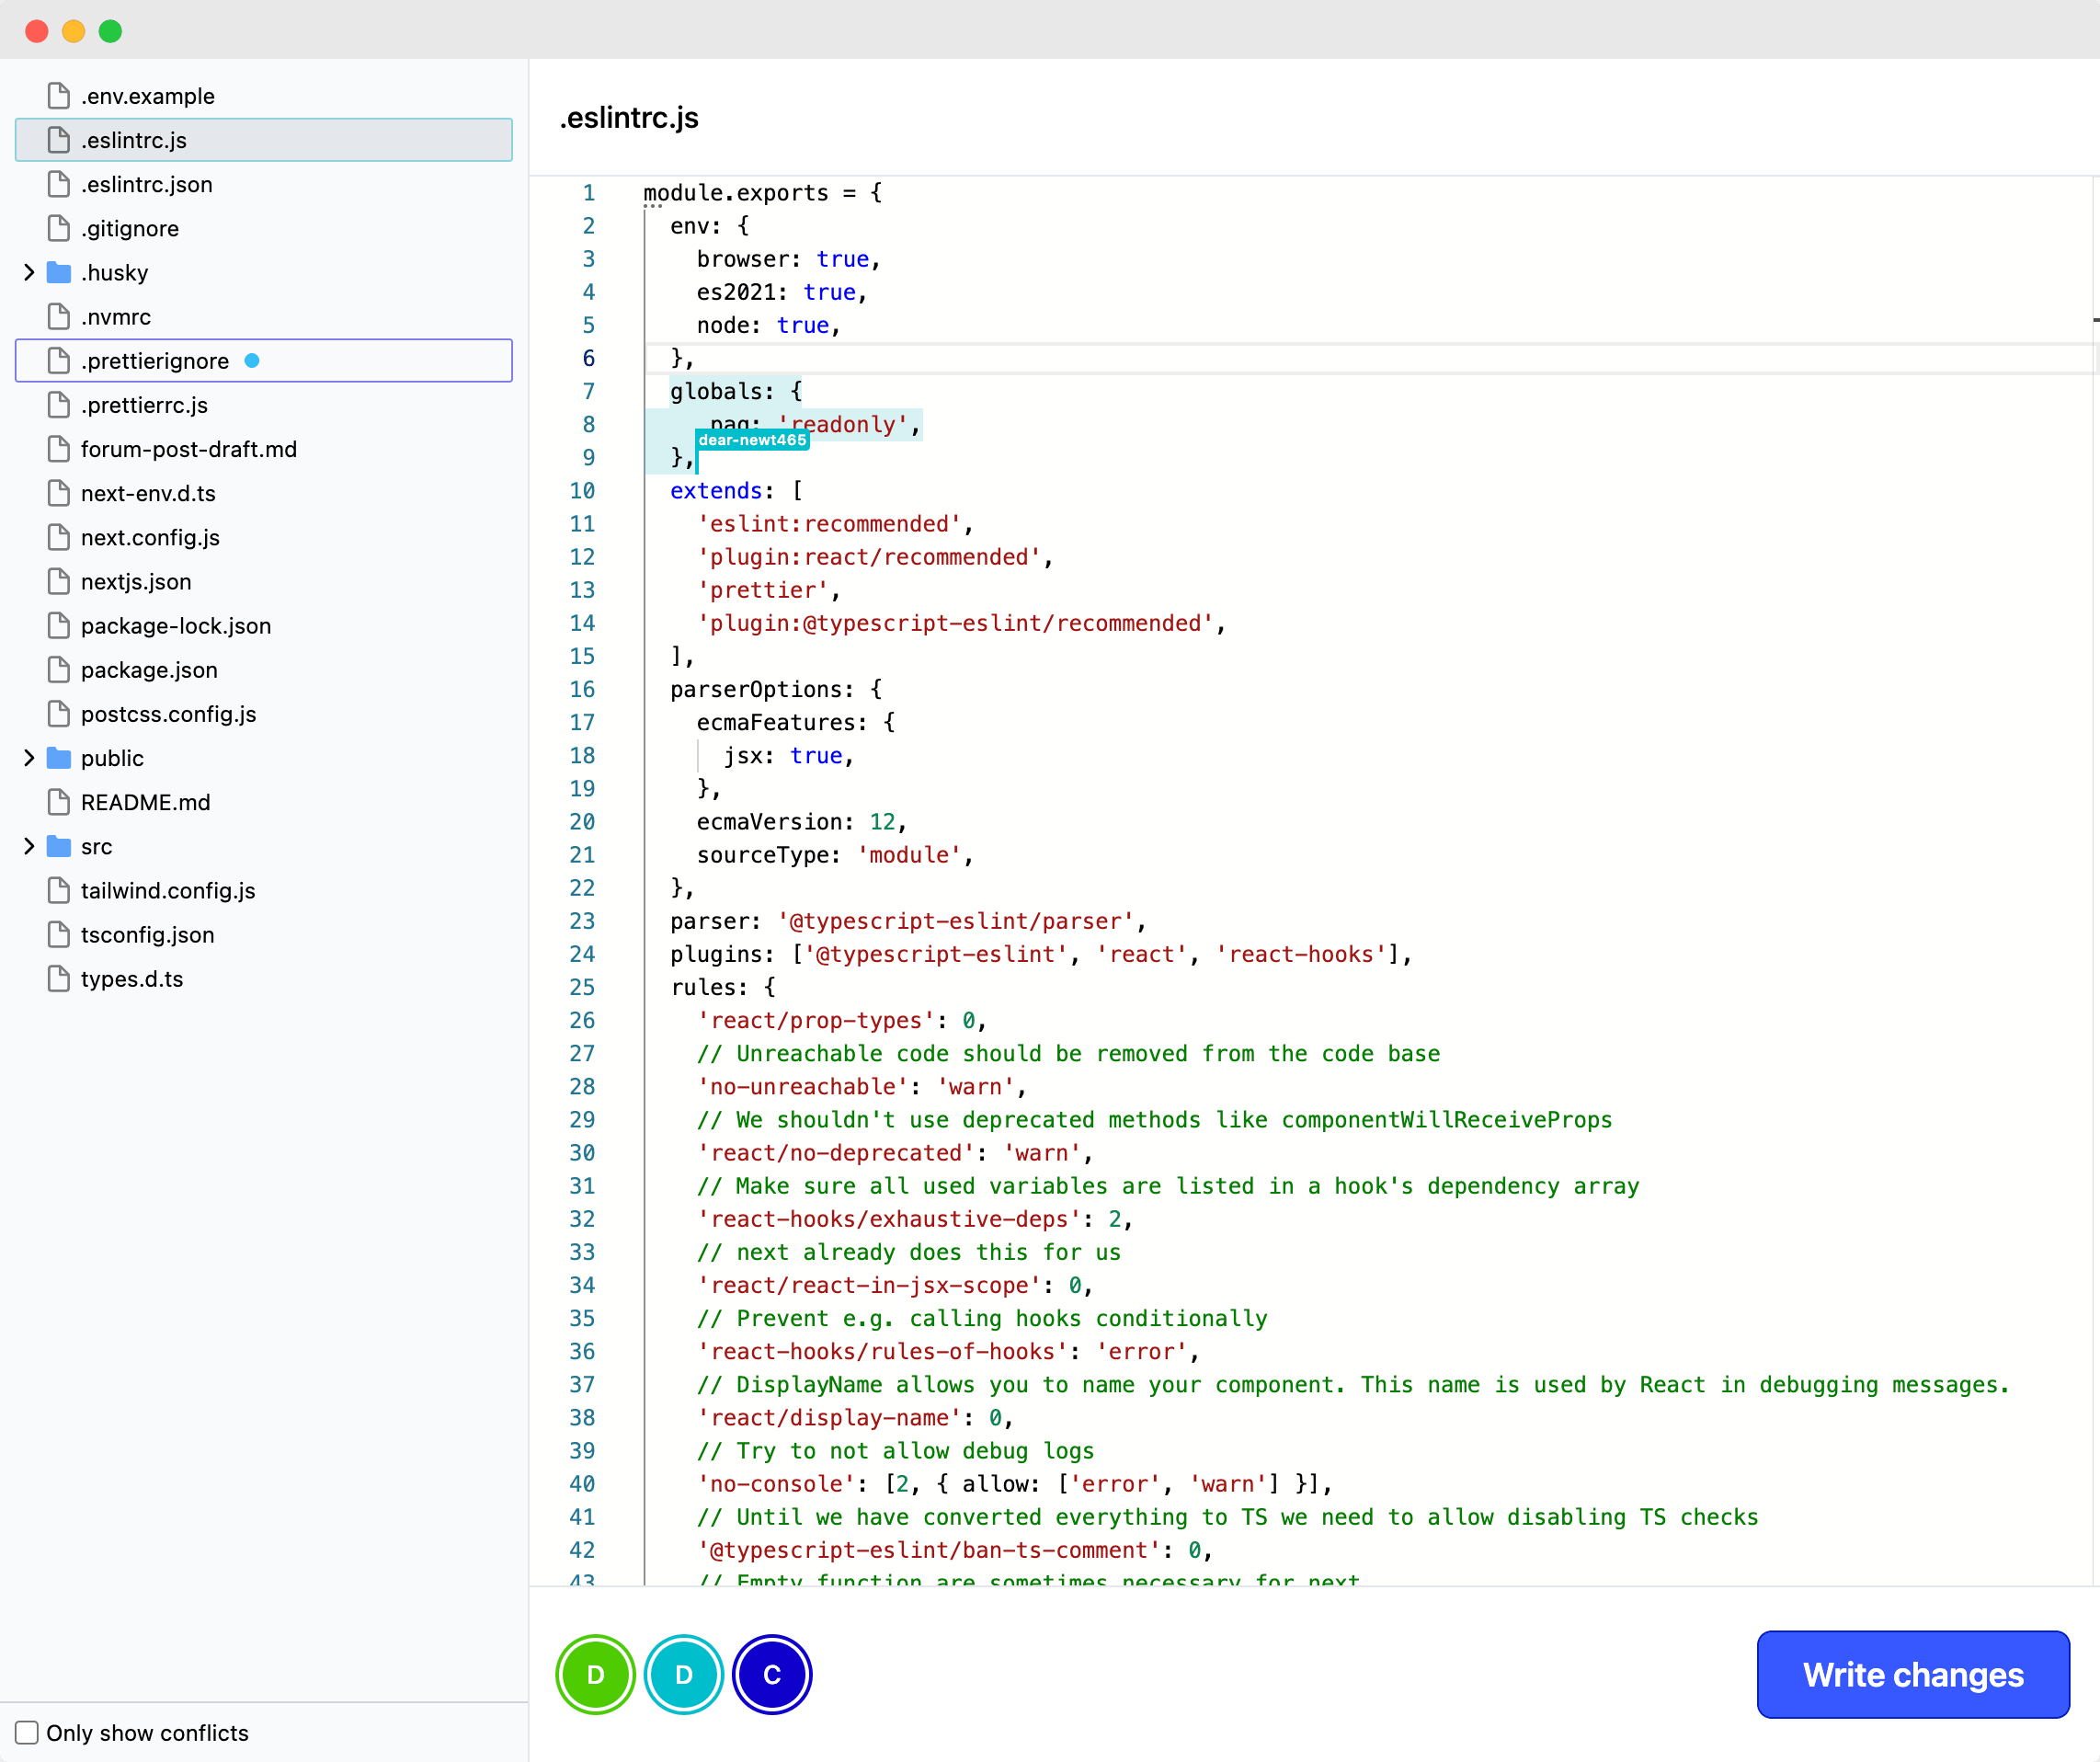 Screenshot of the mergelink application